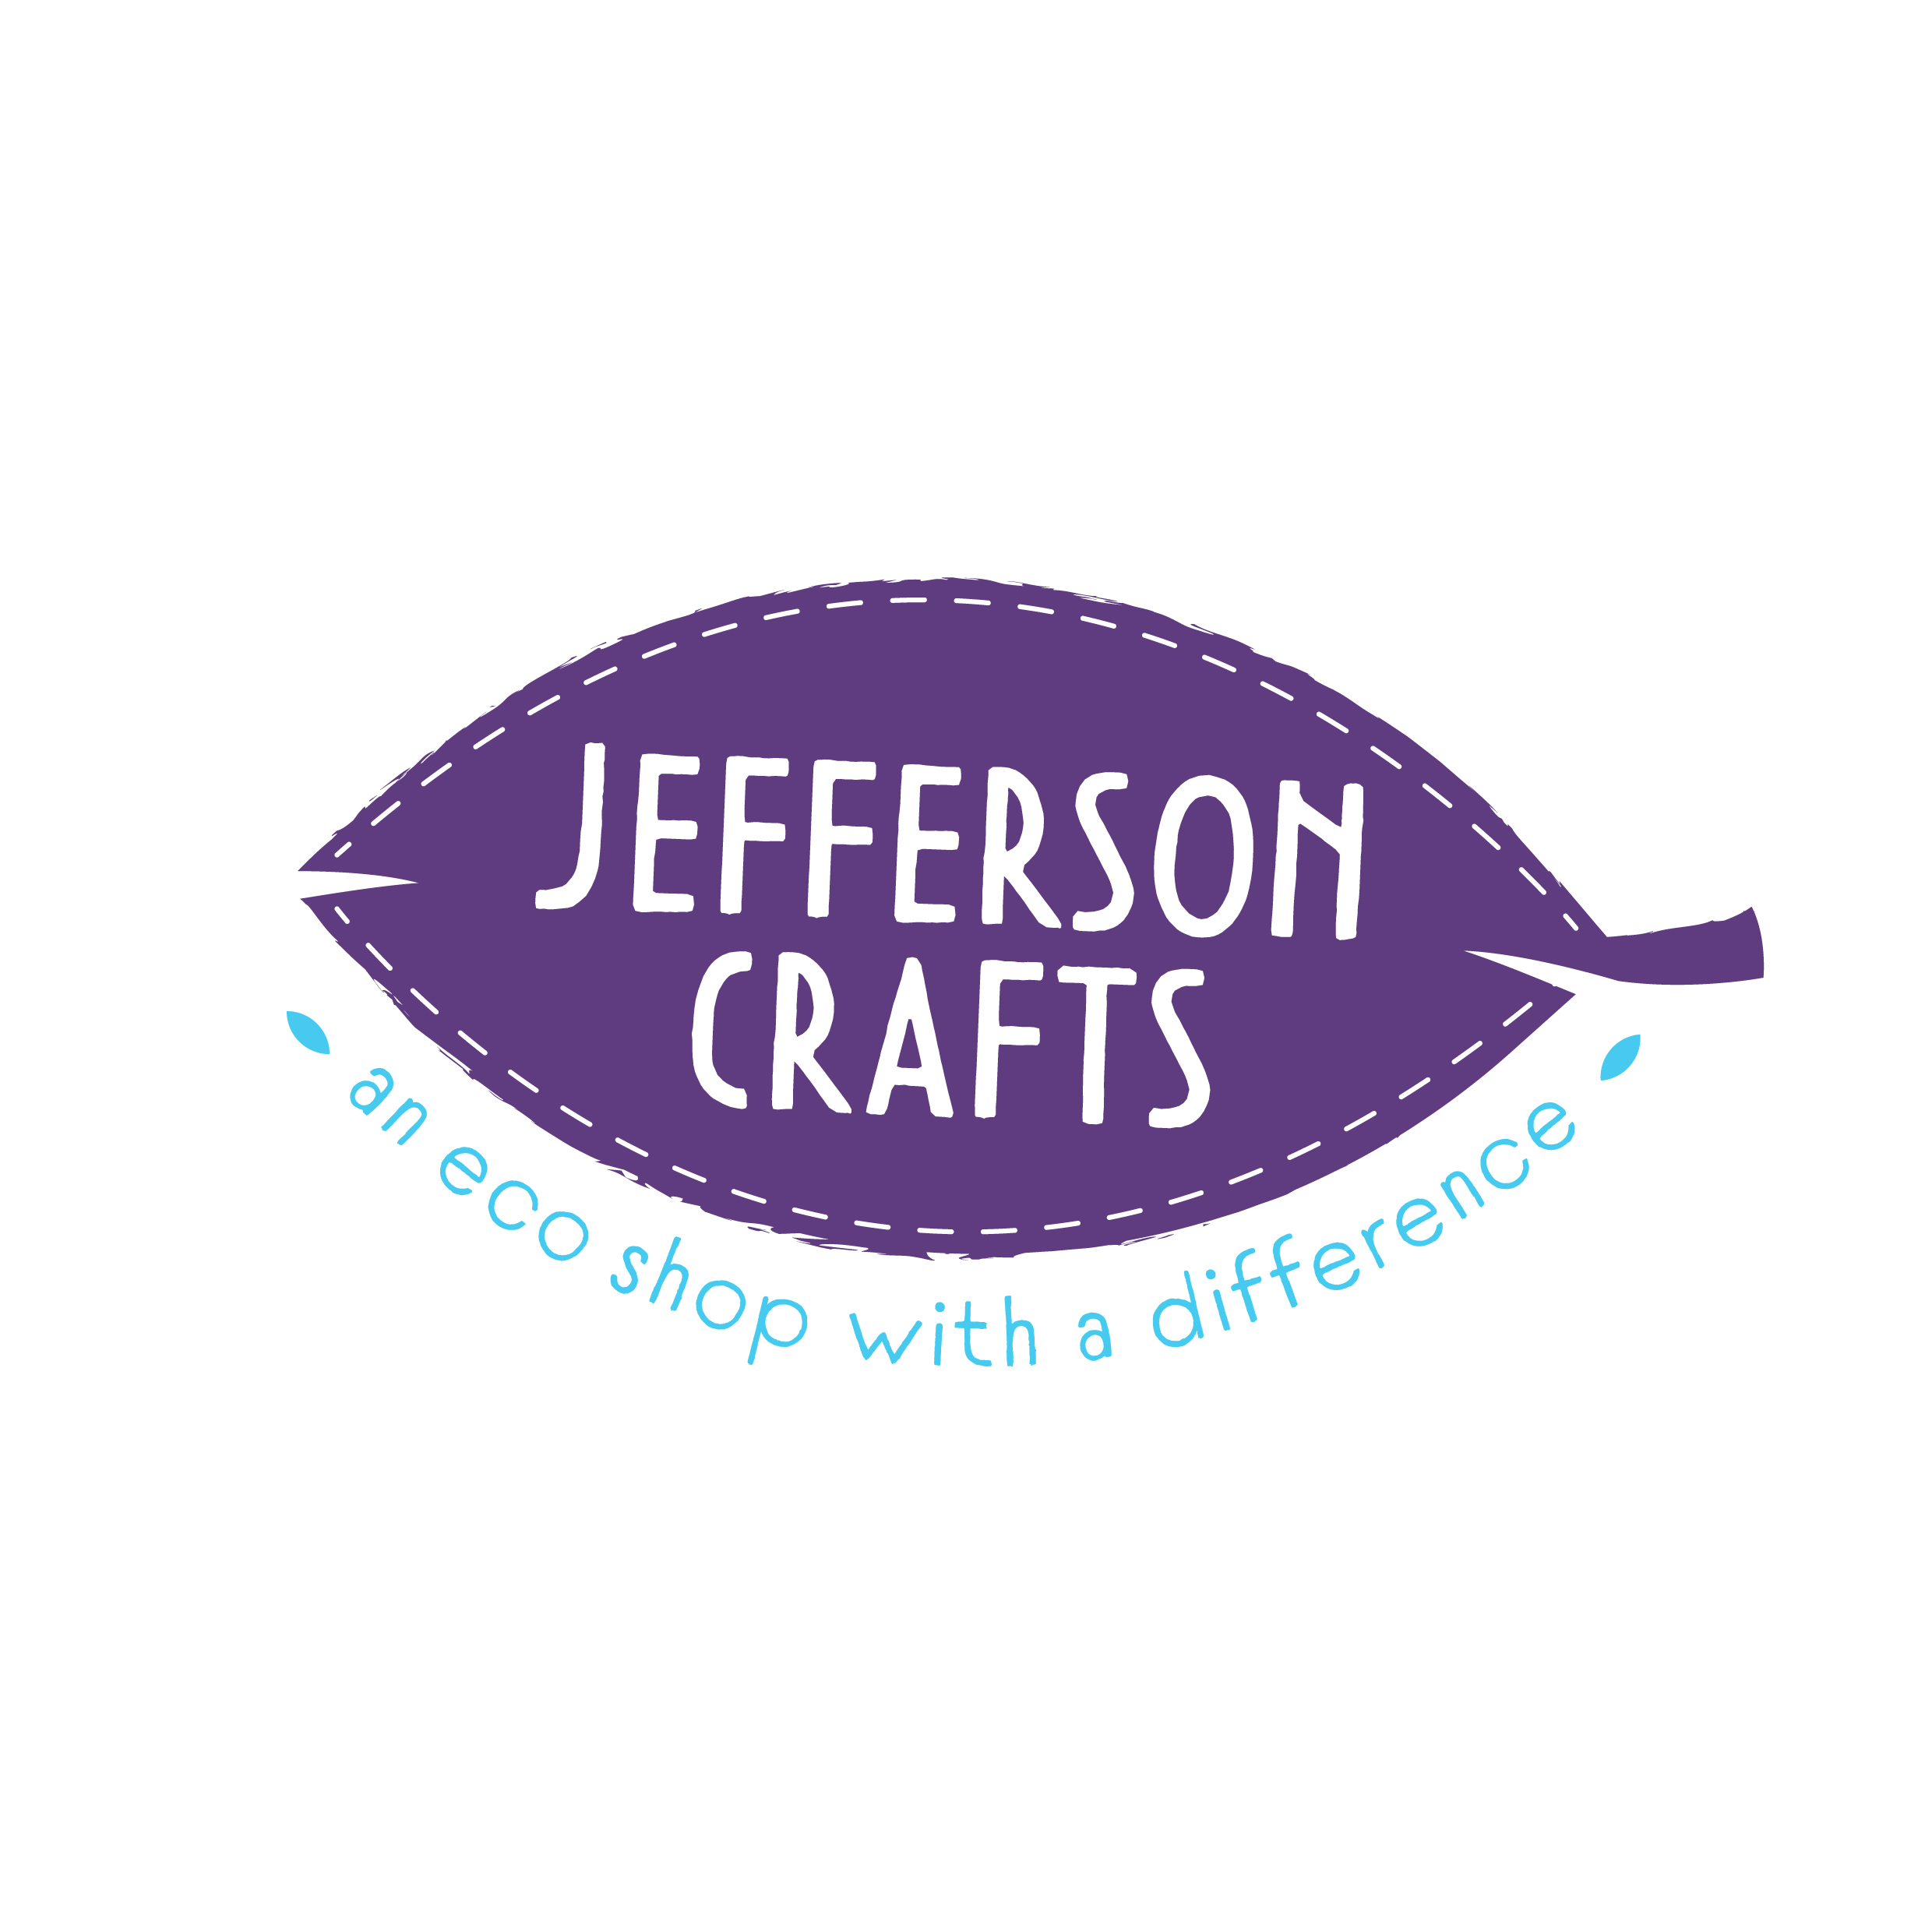 Jefferson Crafts